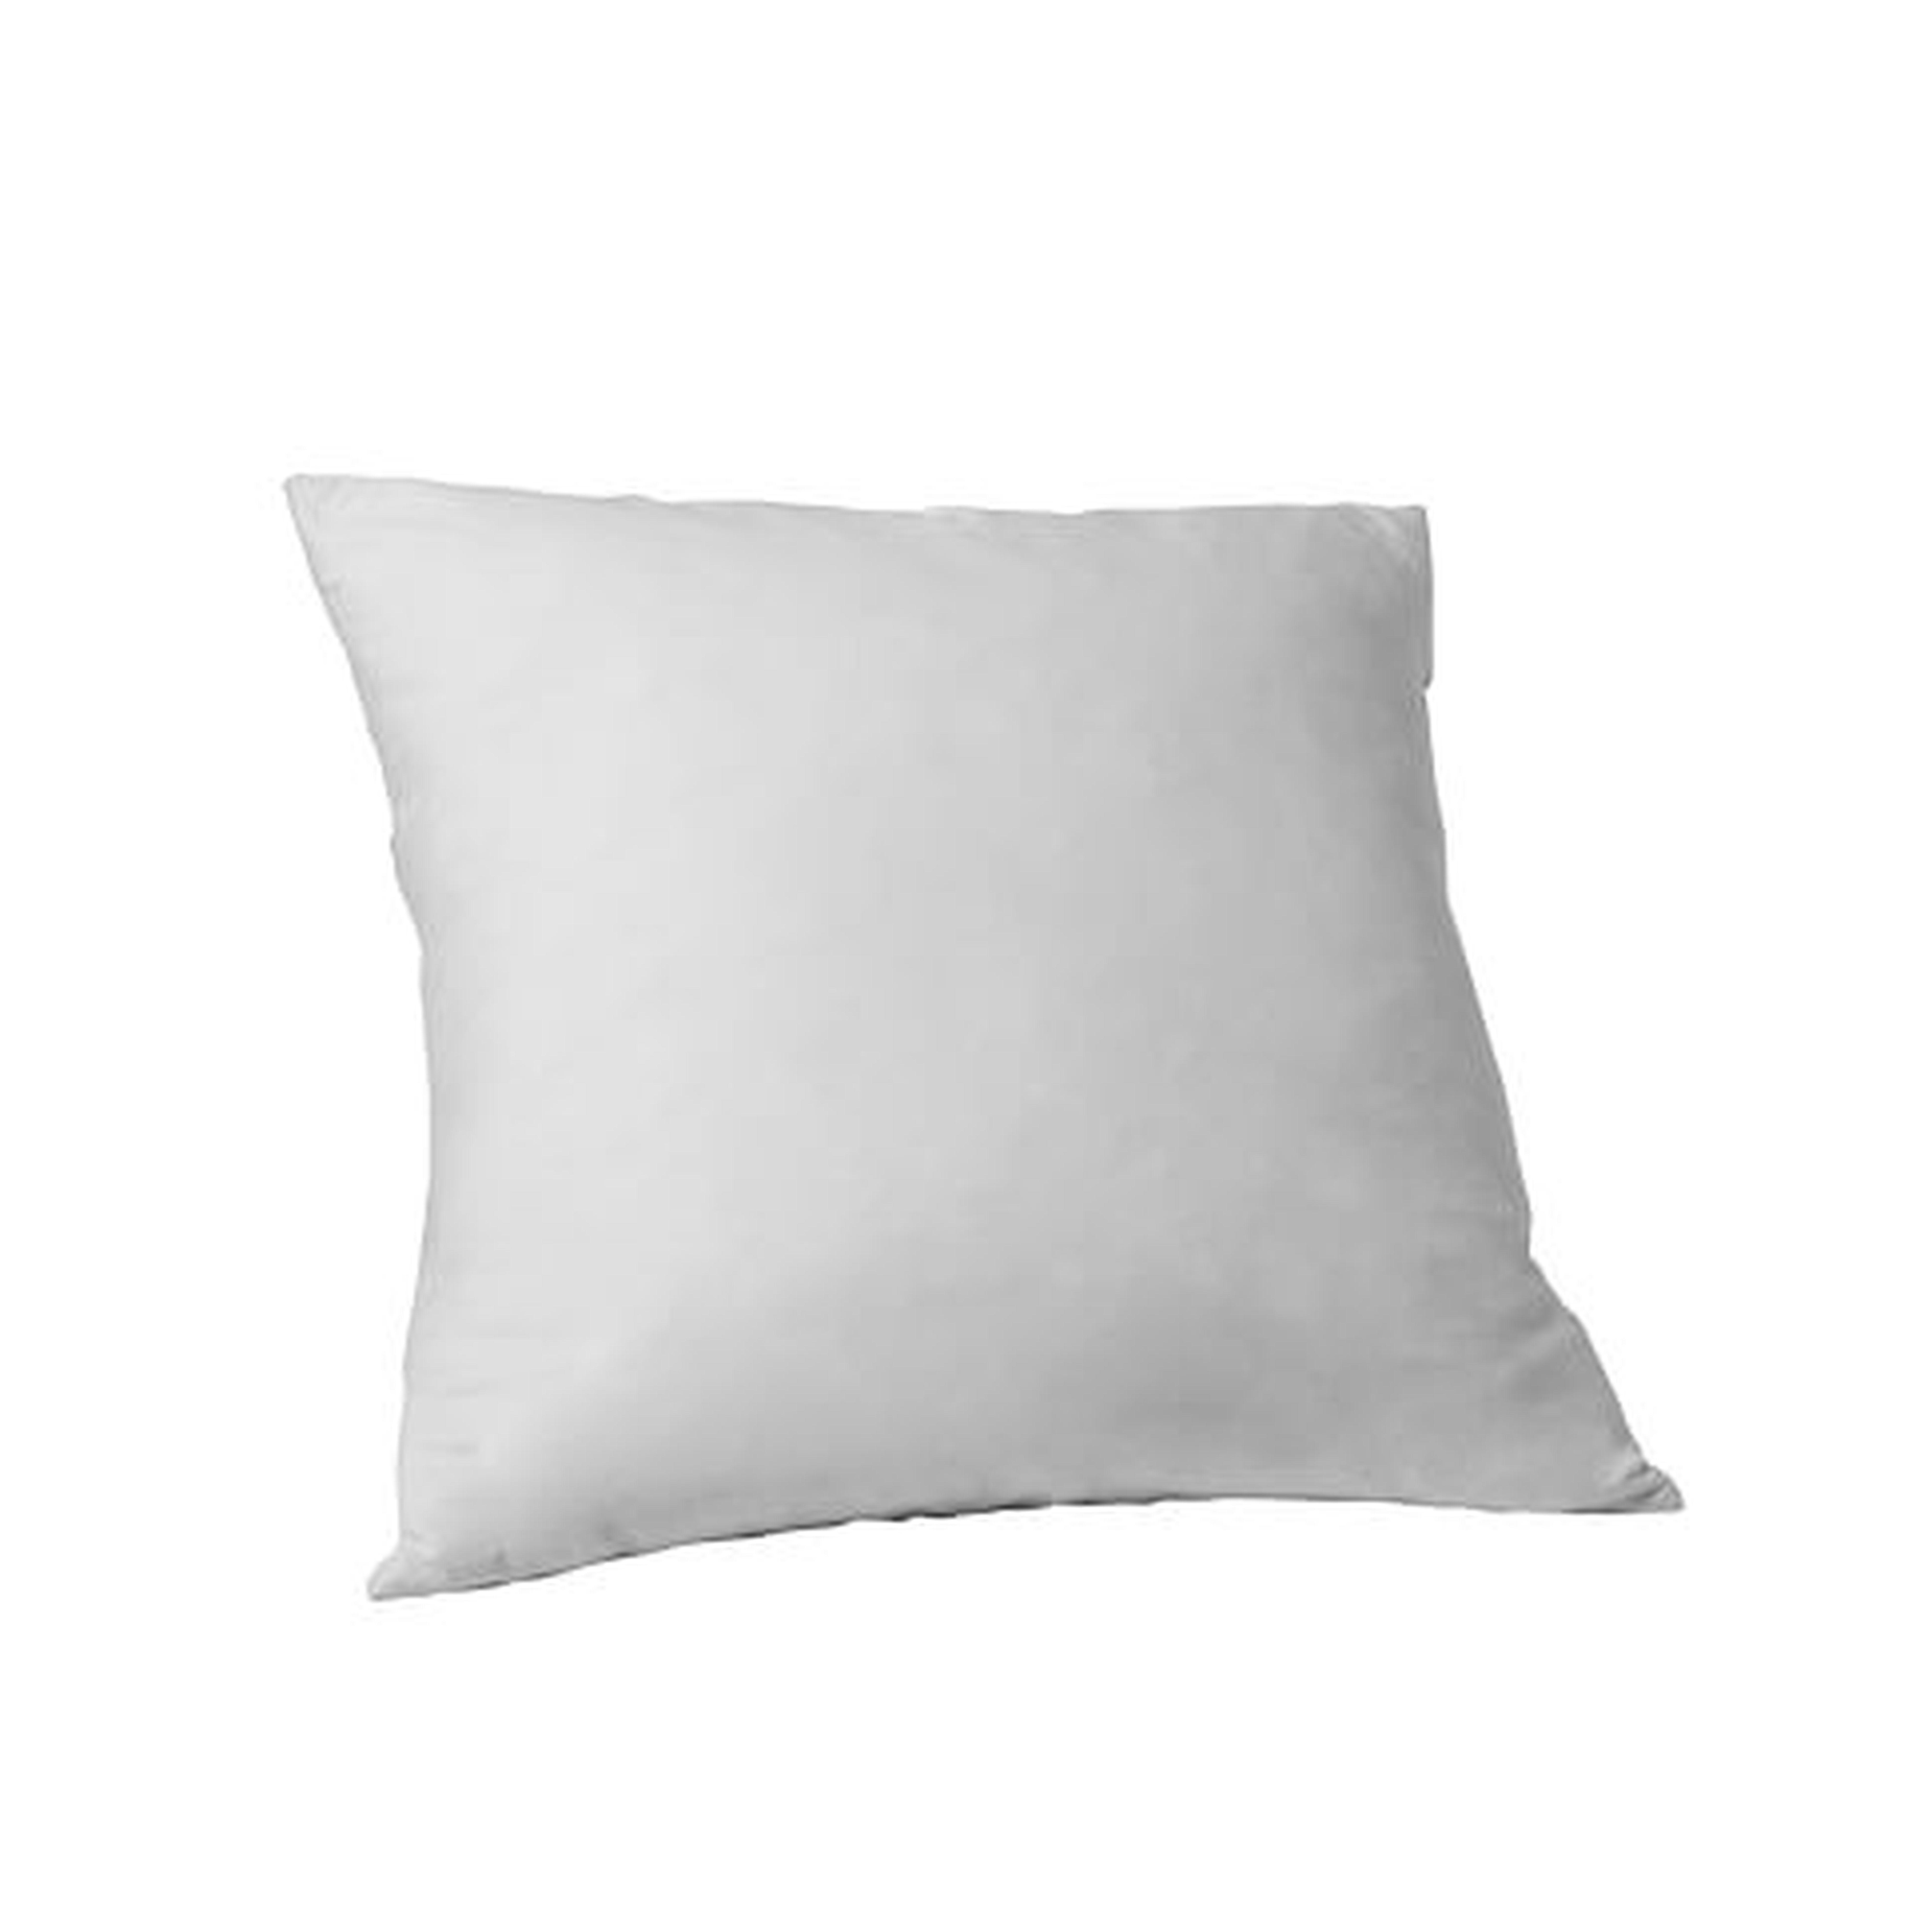 Decorative Pillow Insert – 20"sq - POLY FIBER - West Elm